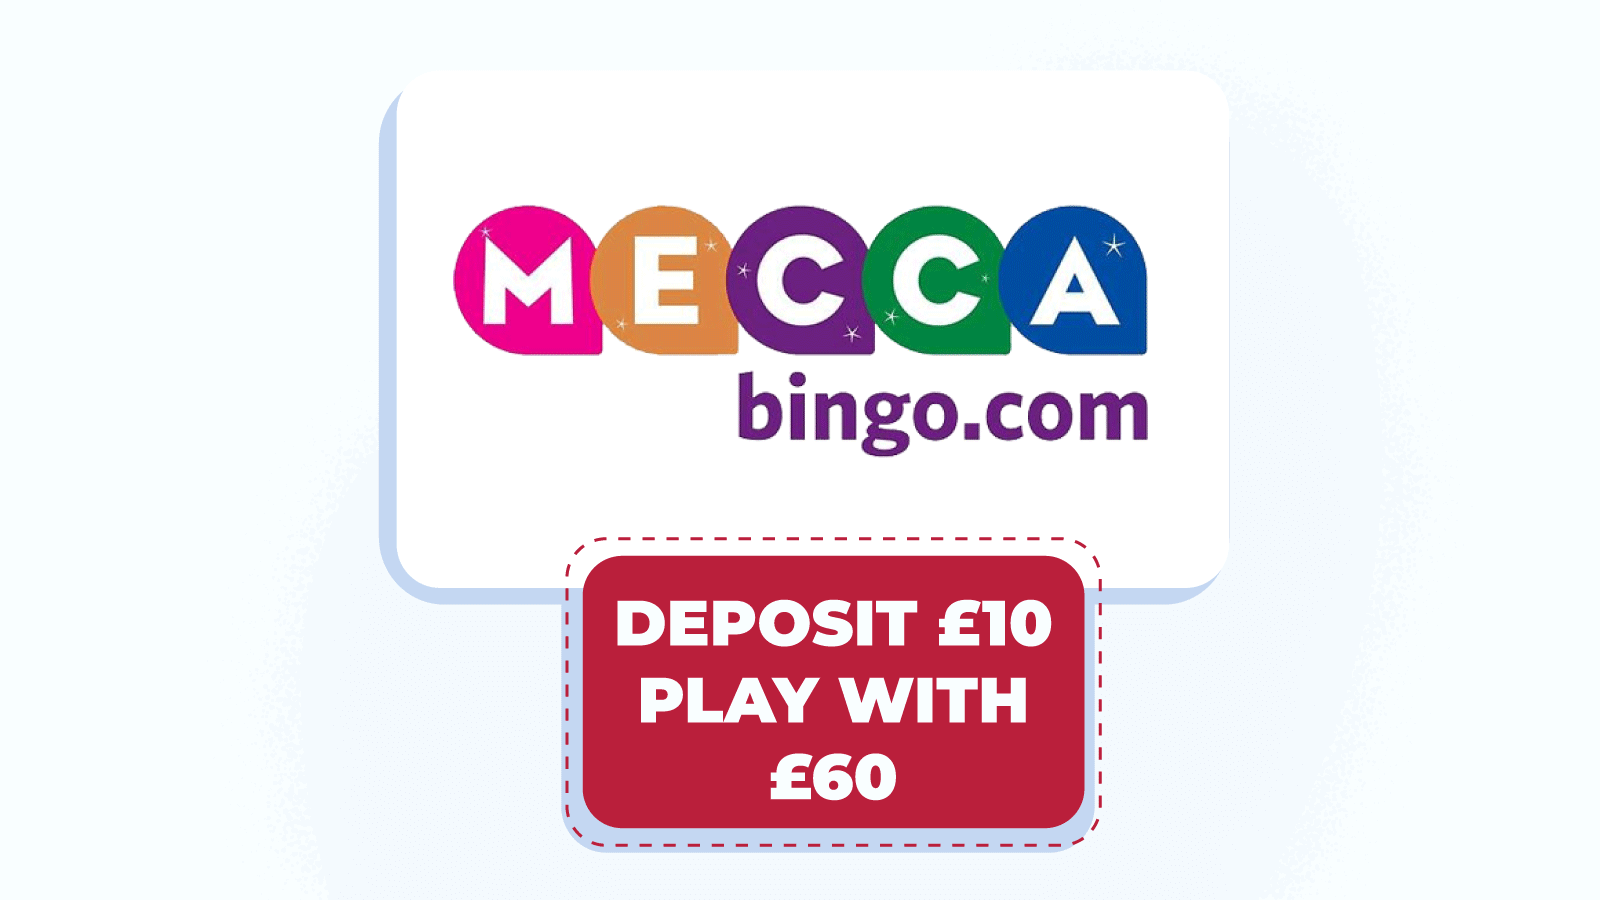 Deposit £10, play with £60 at Mecca Bingo (600% bonus)